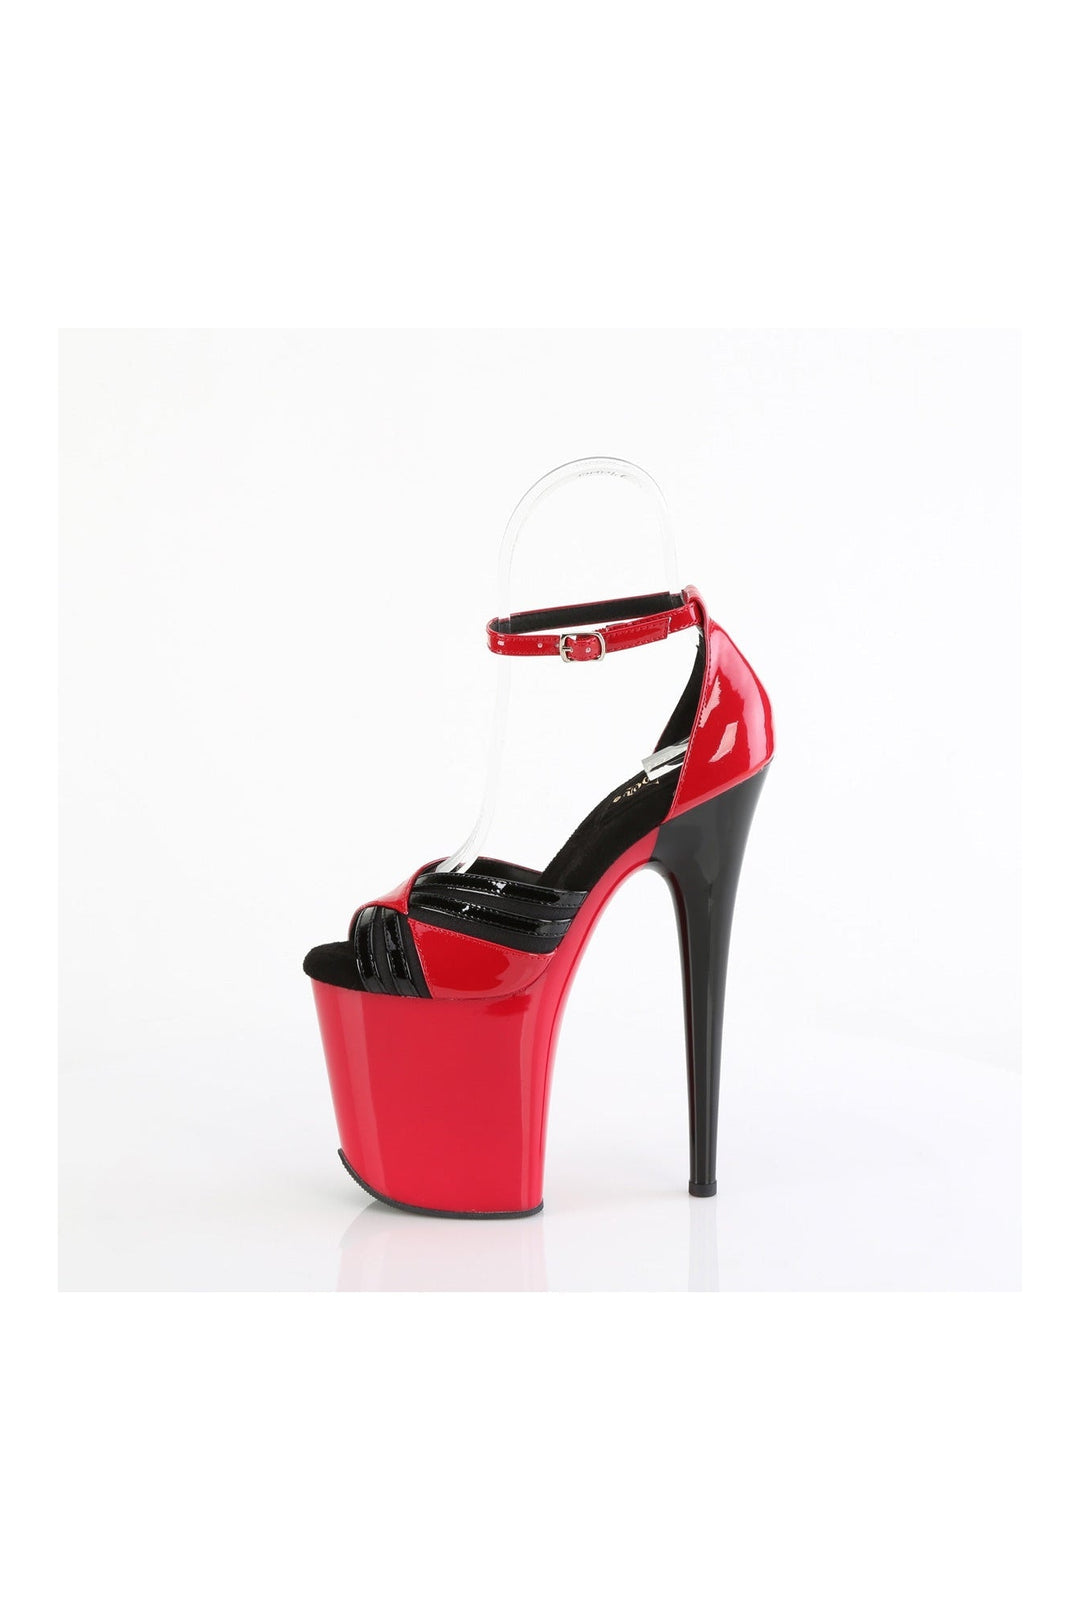 FLAMINGO-884 Red Patent Sandal